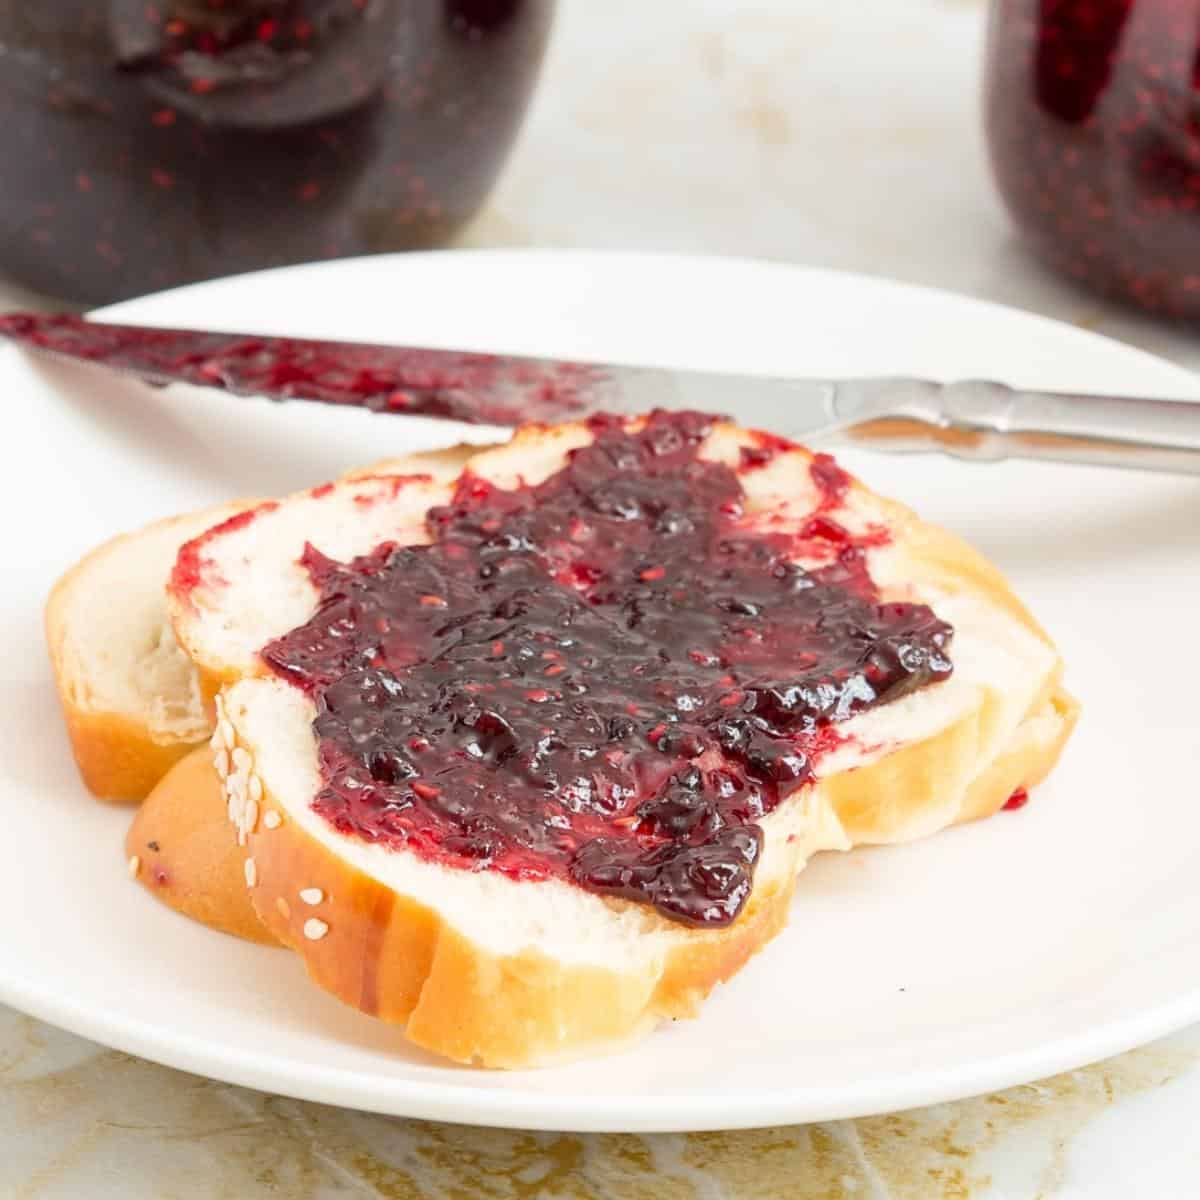 Slice of bread with berry jam.